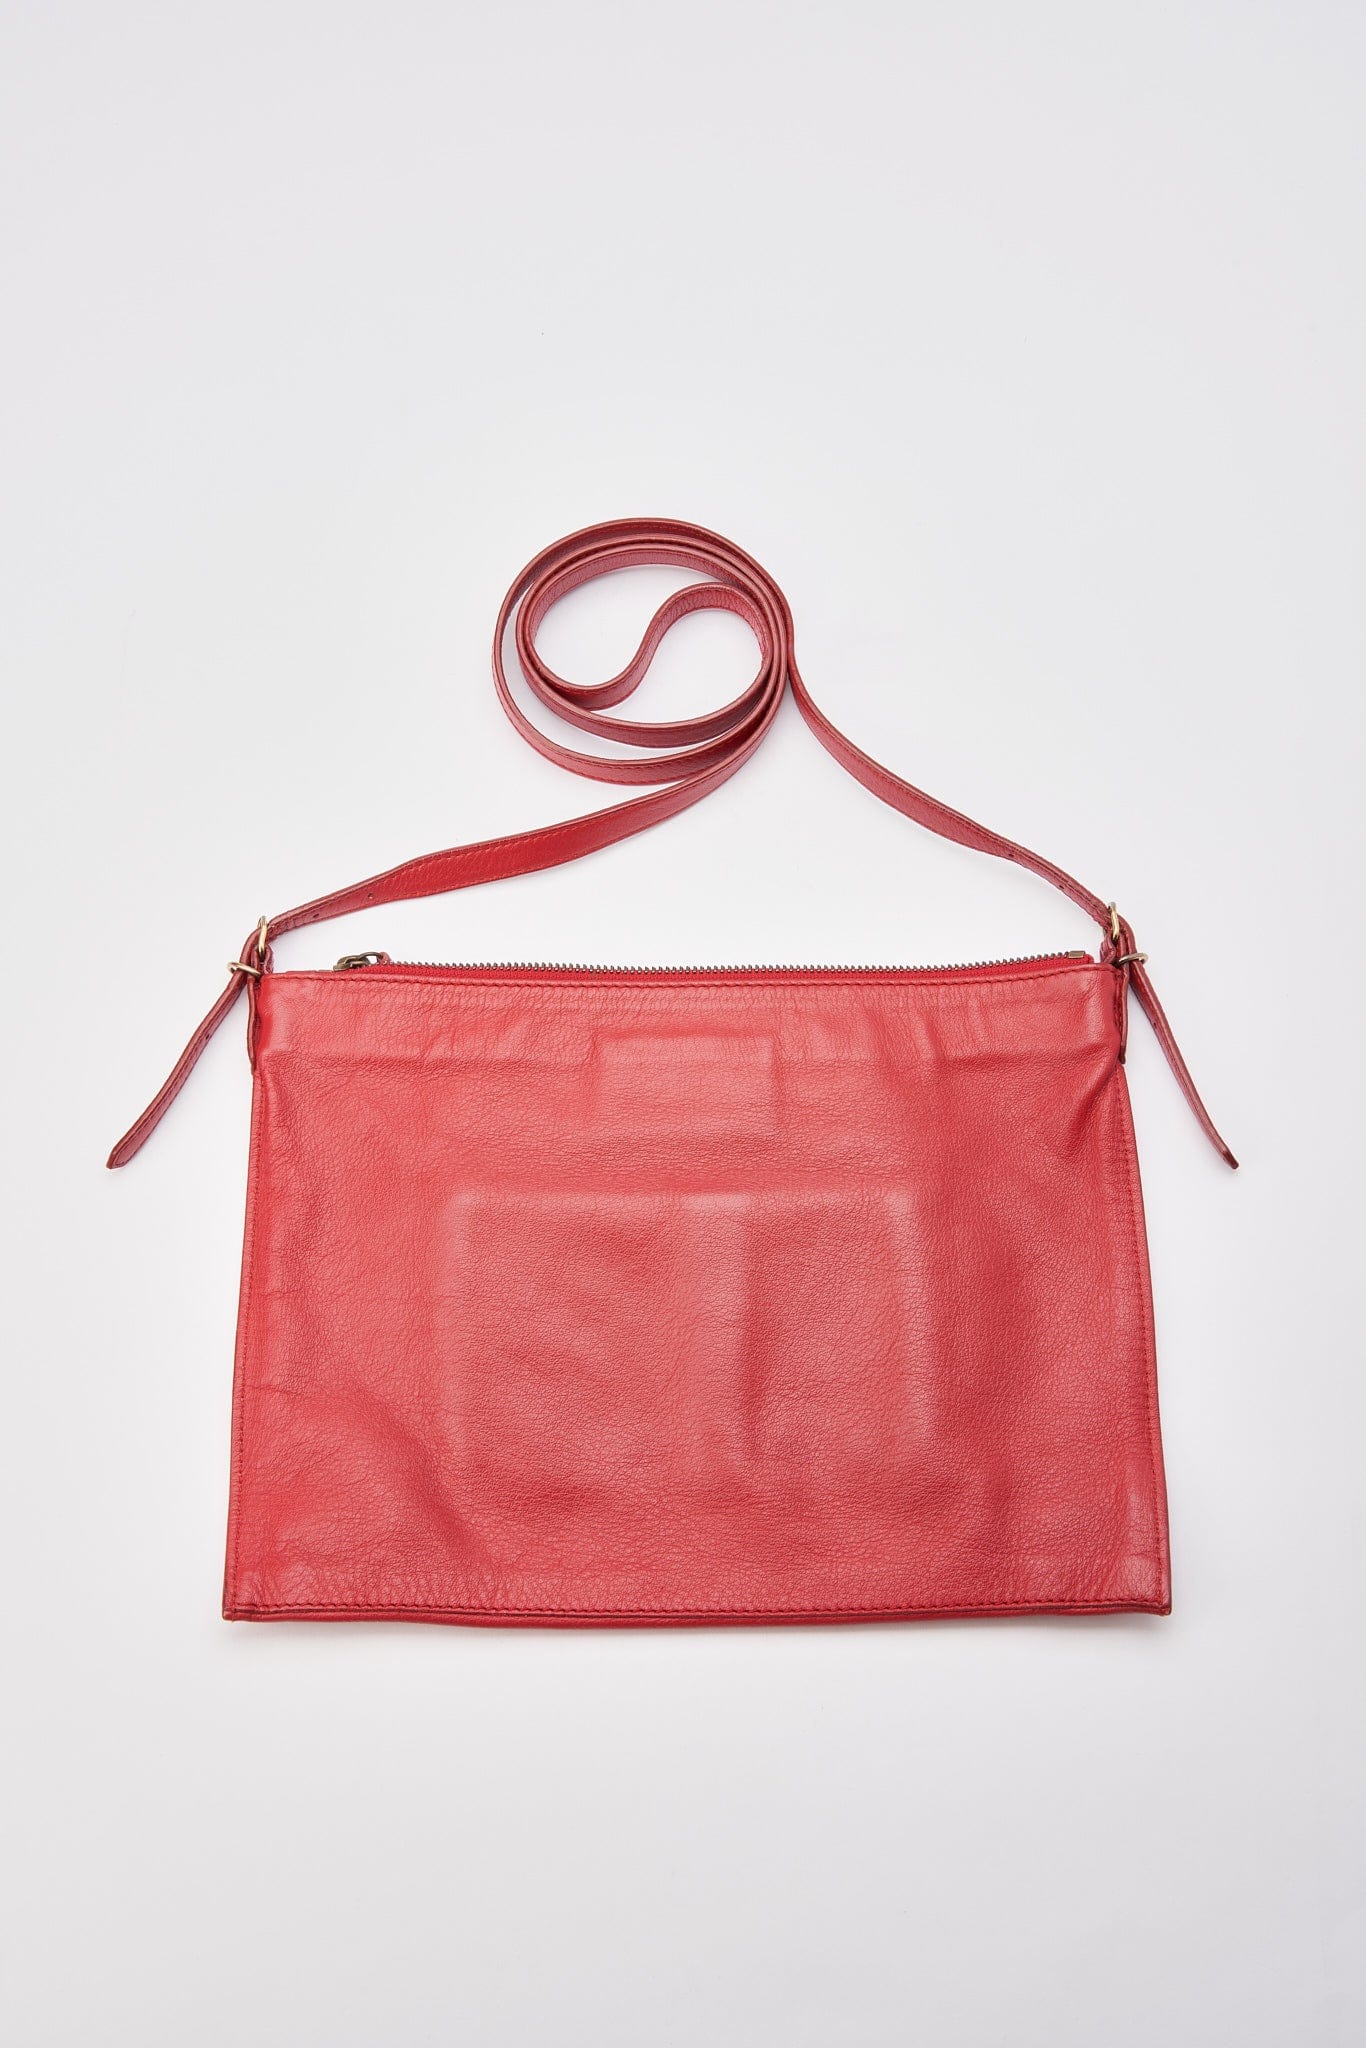 Balenciaga Red Leather City Crossbody Bag